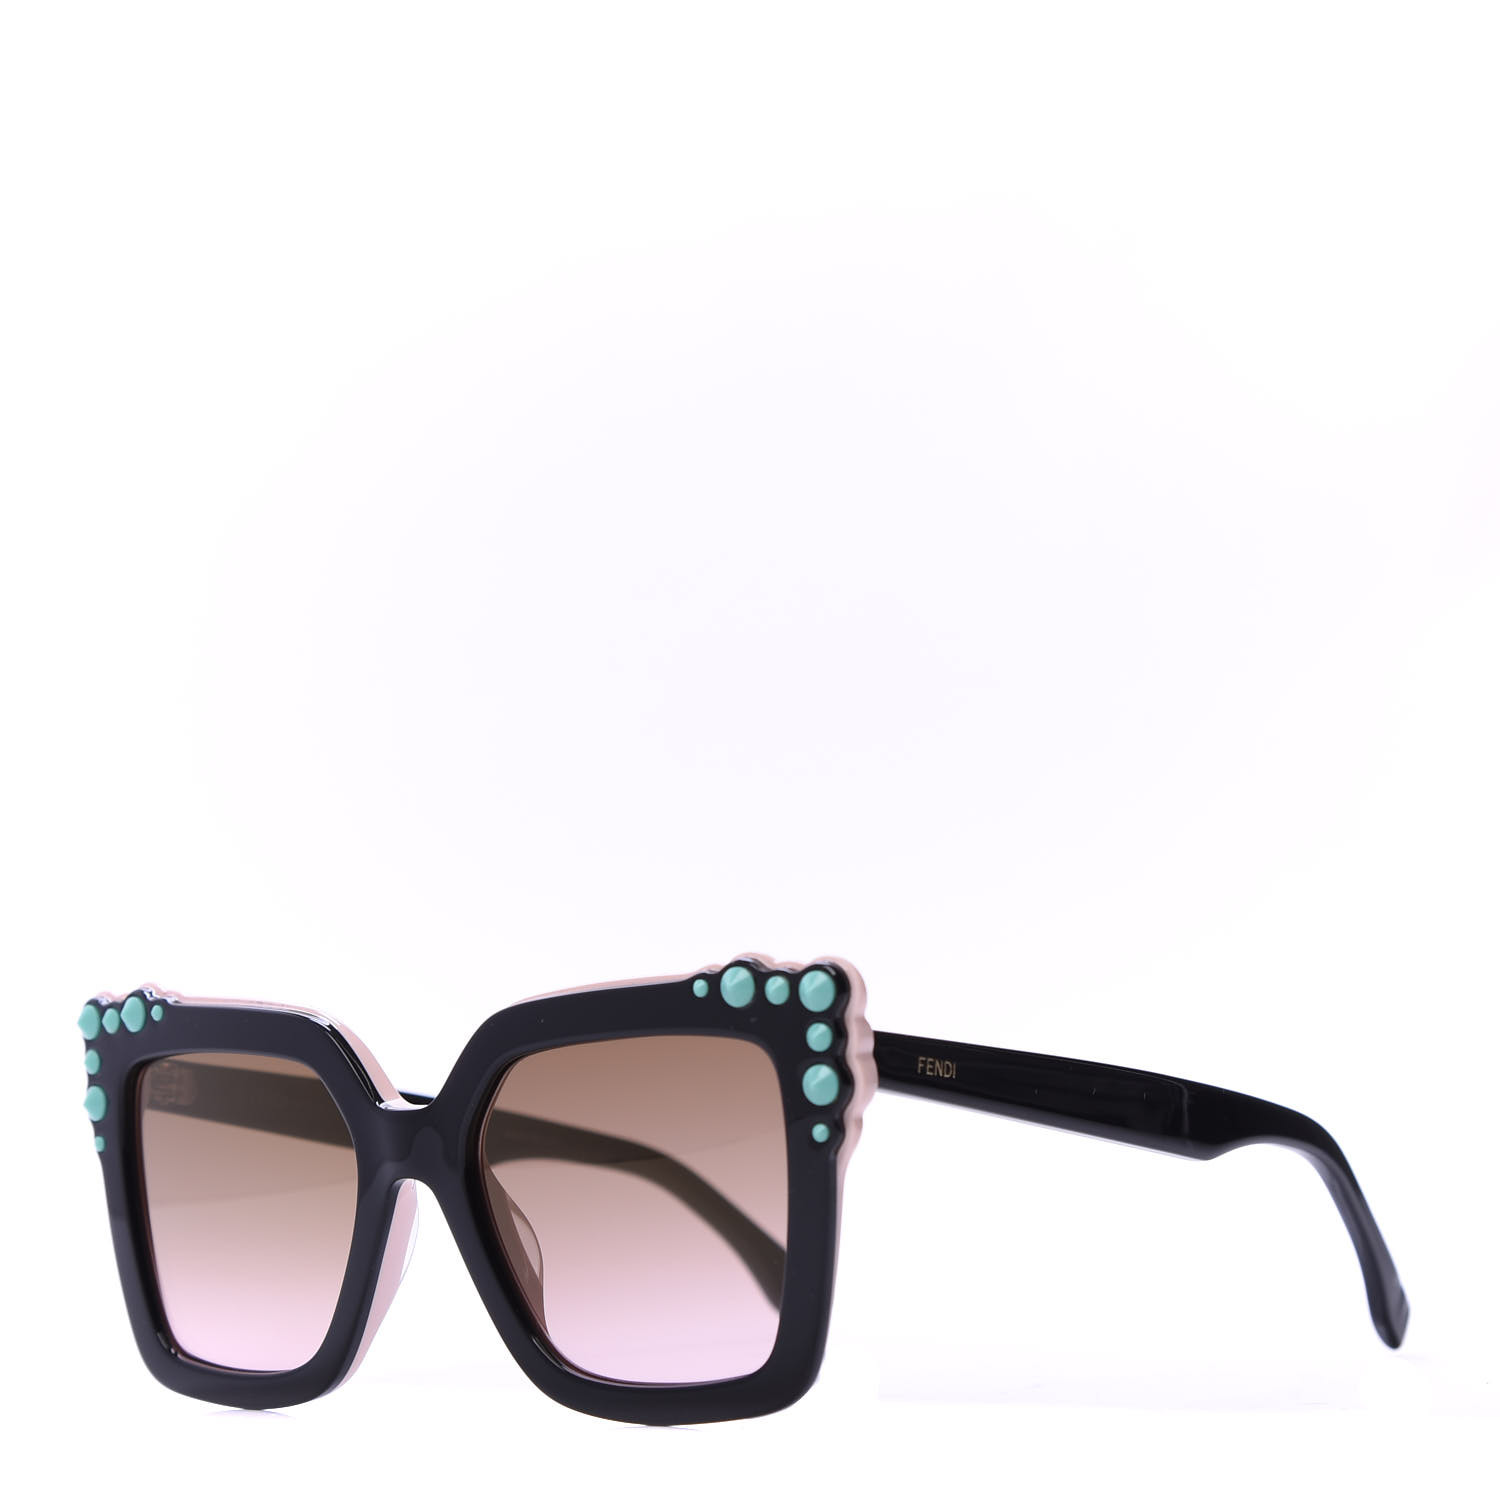 FENDI Studded Square Cat Eye Sunglasses 